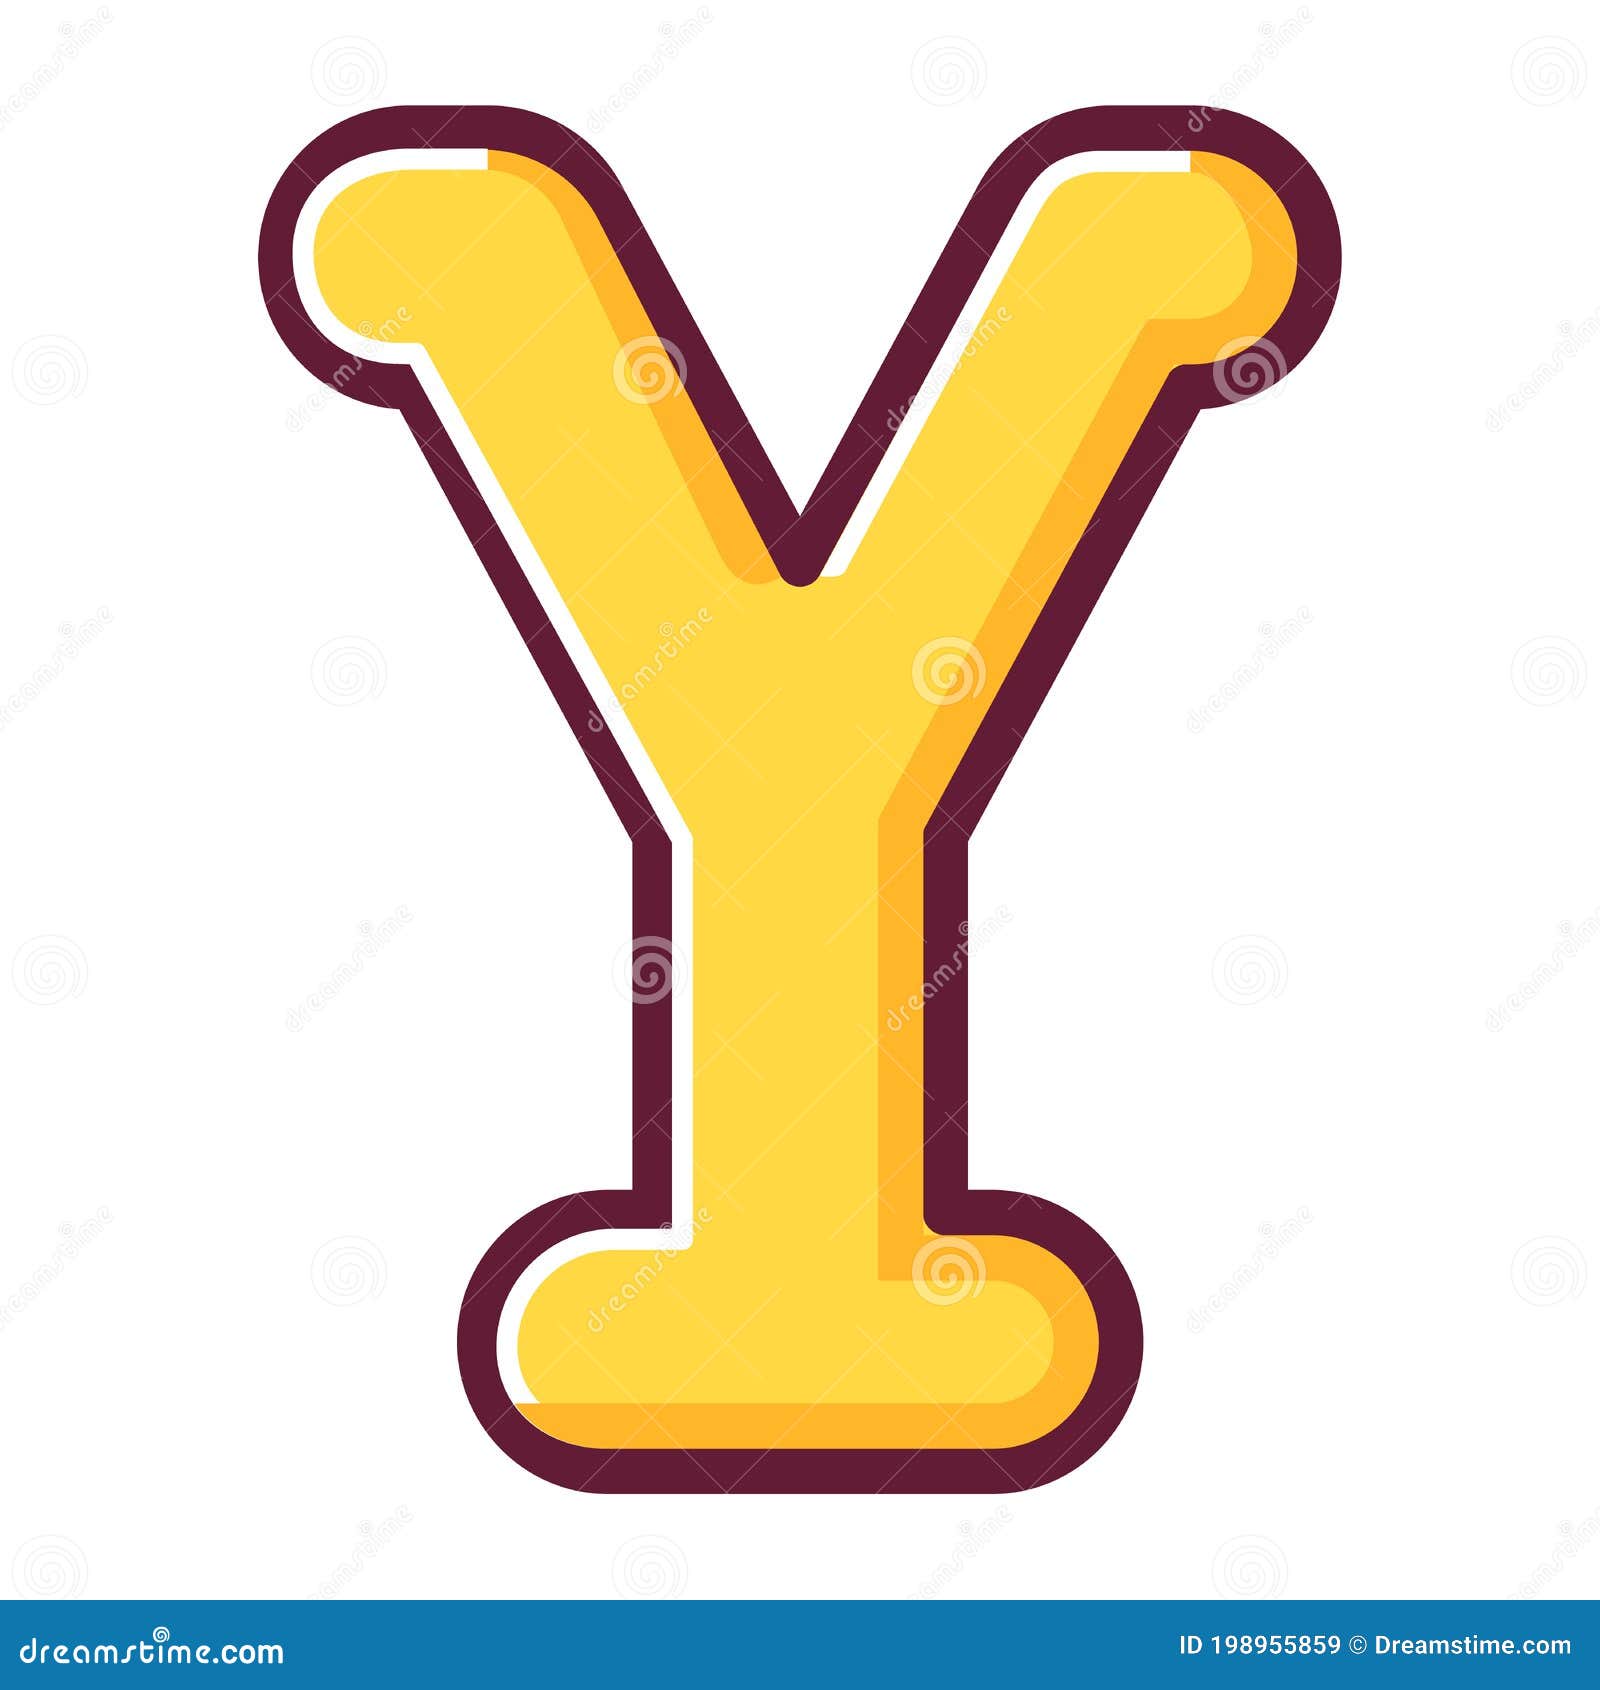 Y字母3d字母矢量設計, 標識, 元素, 形狀向量圖案素材免費下載，PNG，EPS和AI素材下載 - Pngtree